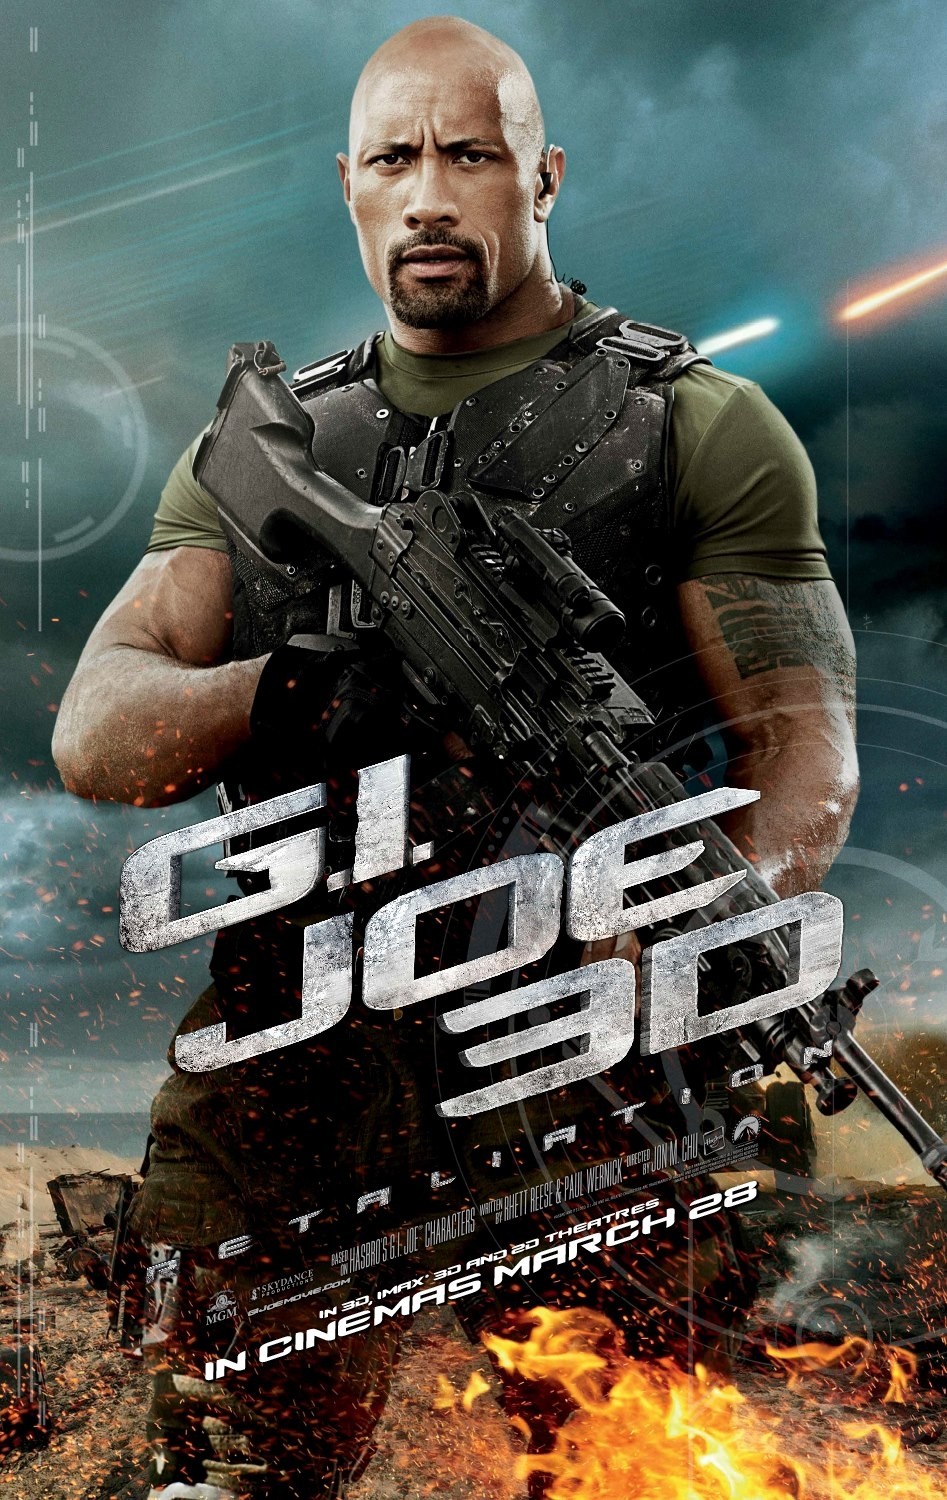 Extra Large Movie Poster Image for G.I. Joe: Retaliation (#32 of 32)